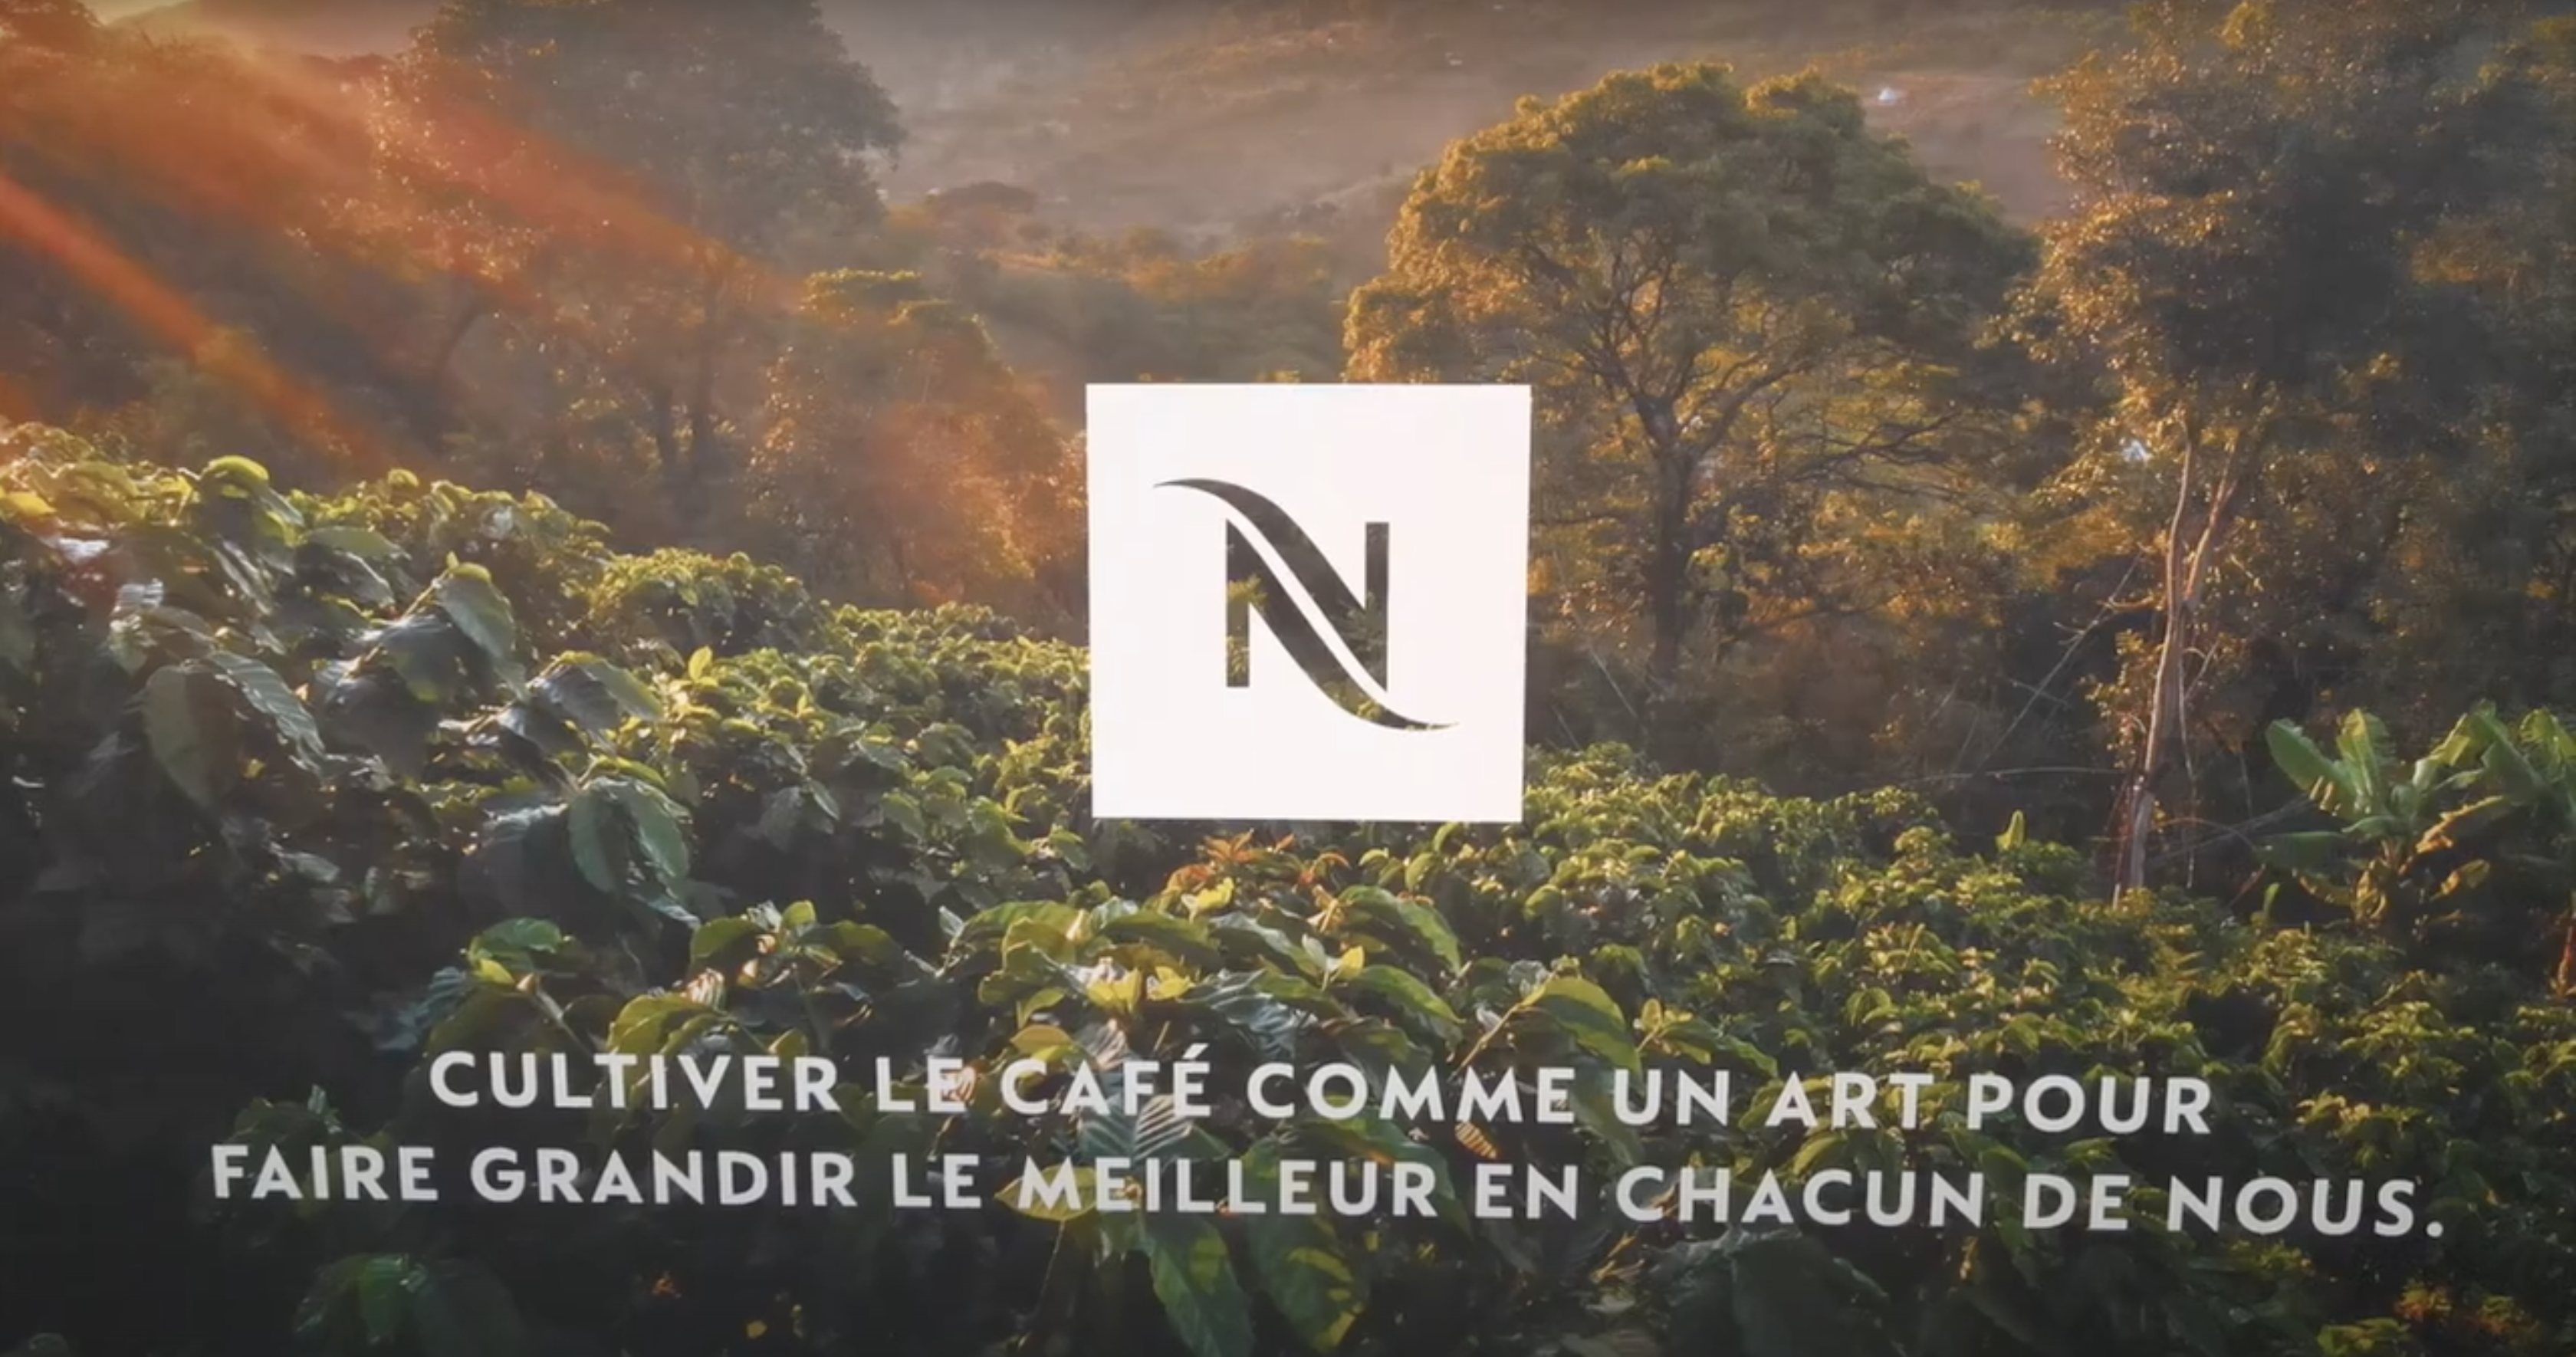 Film institutionnel - présentation locaux Savigny - Nespresso